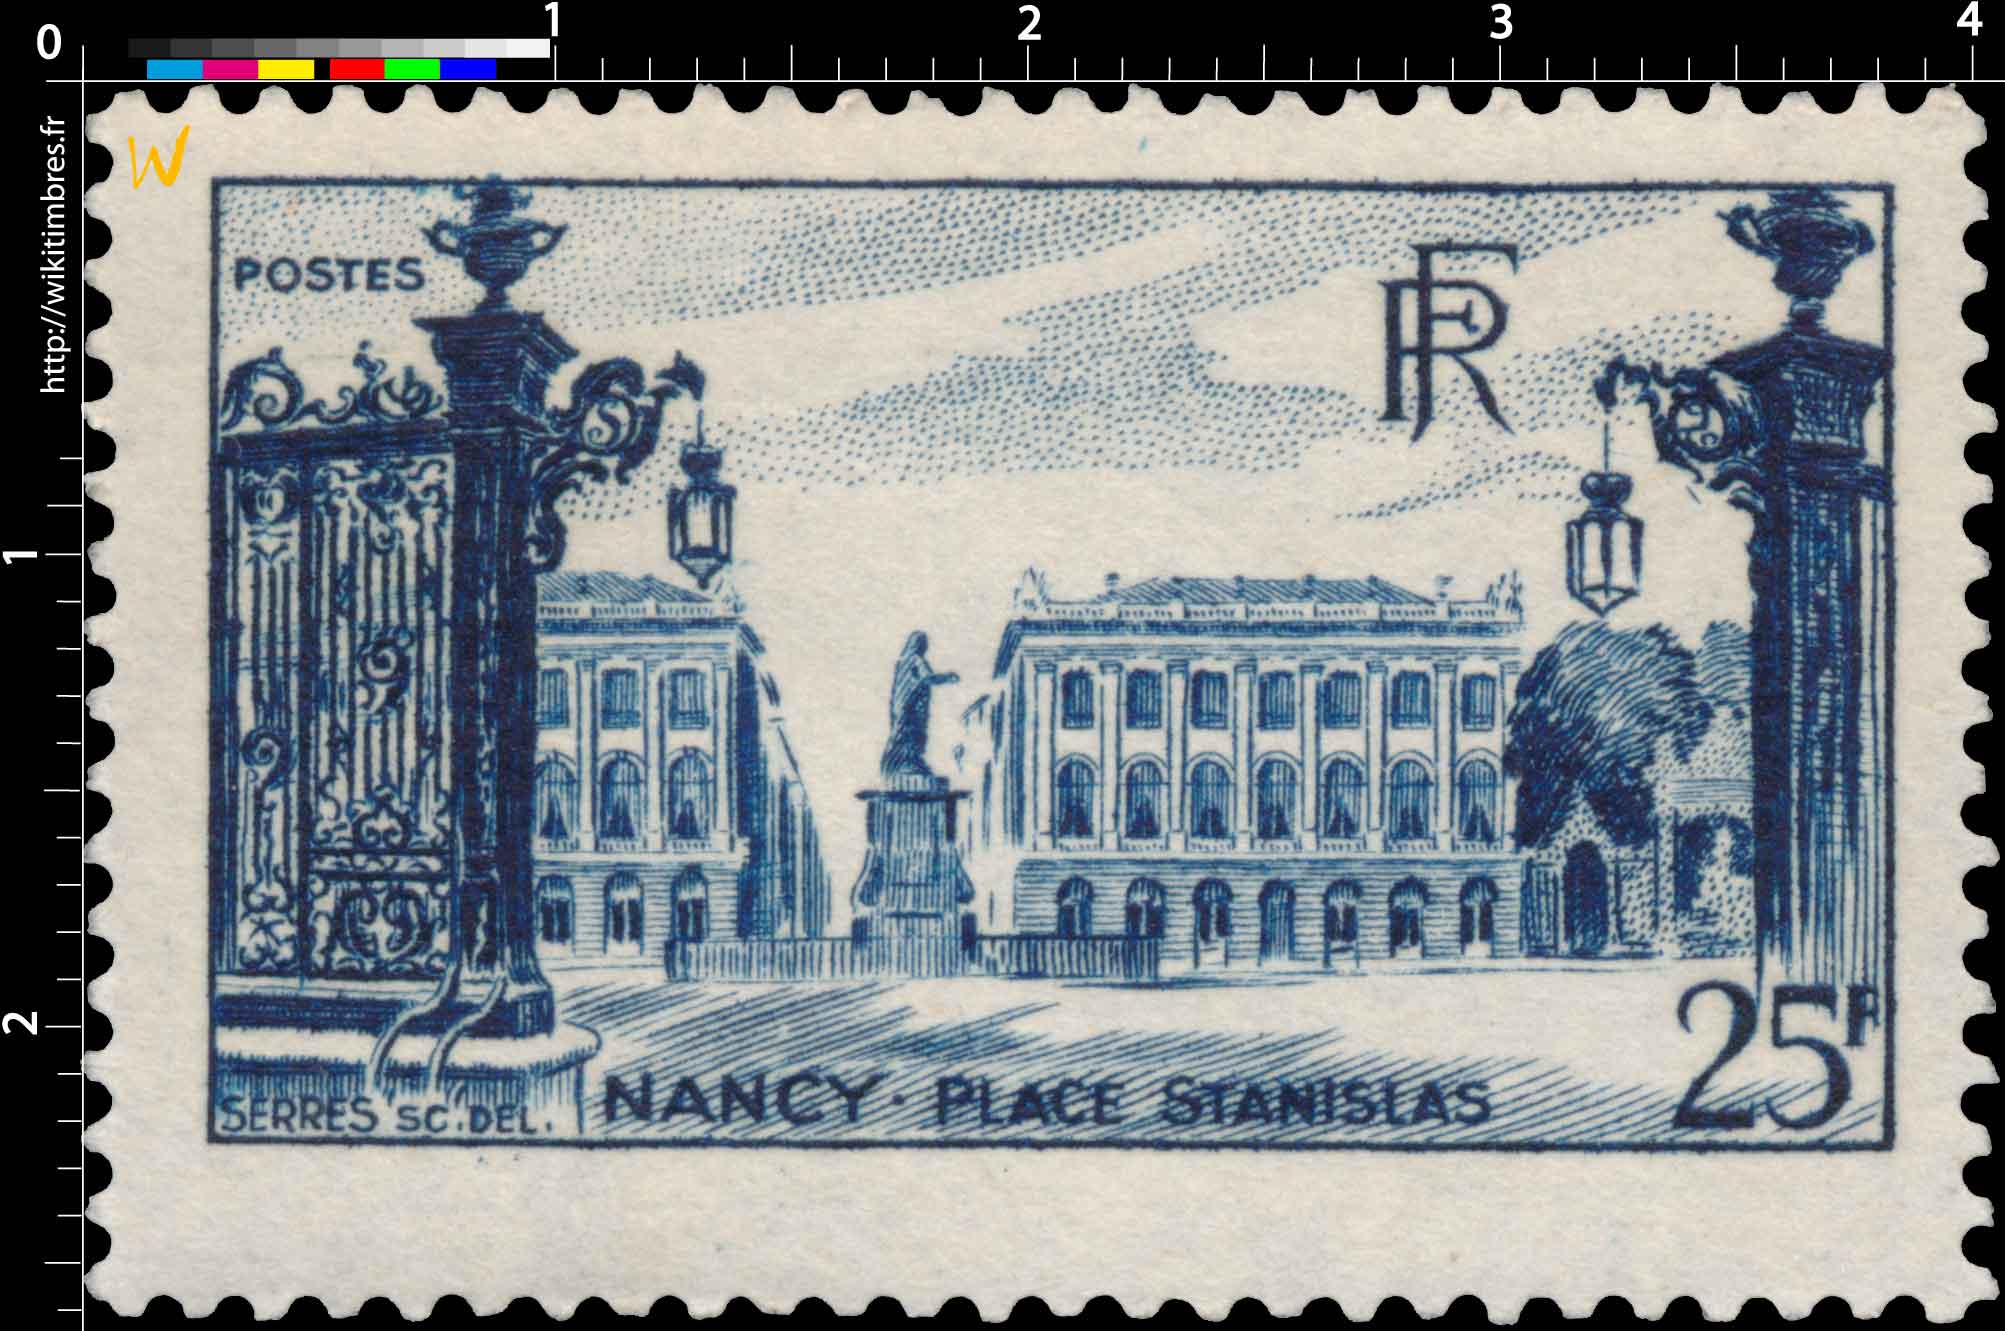 NANCY - PLACE STANISLAS